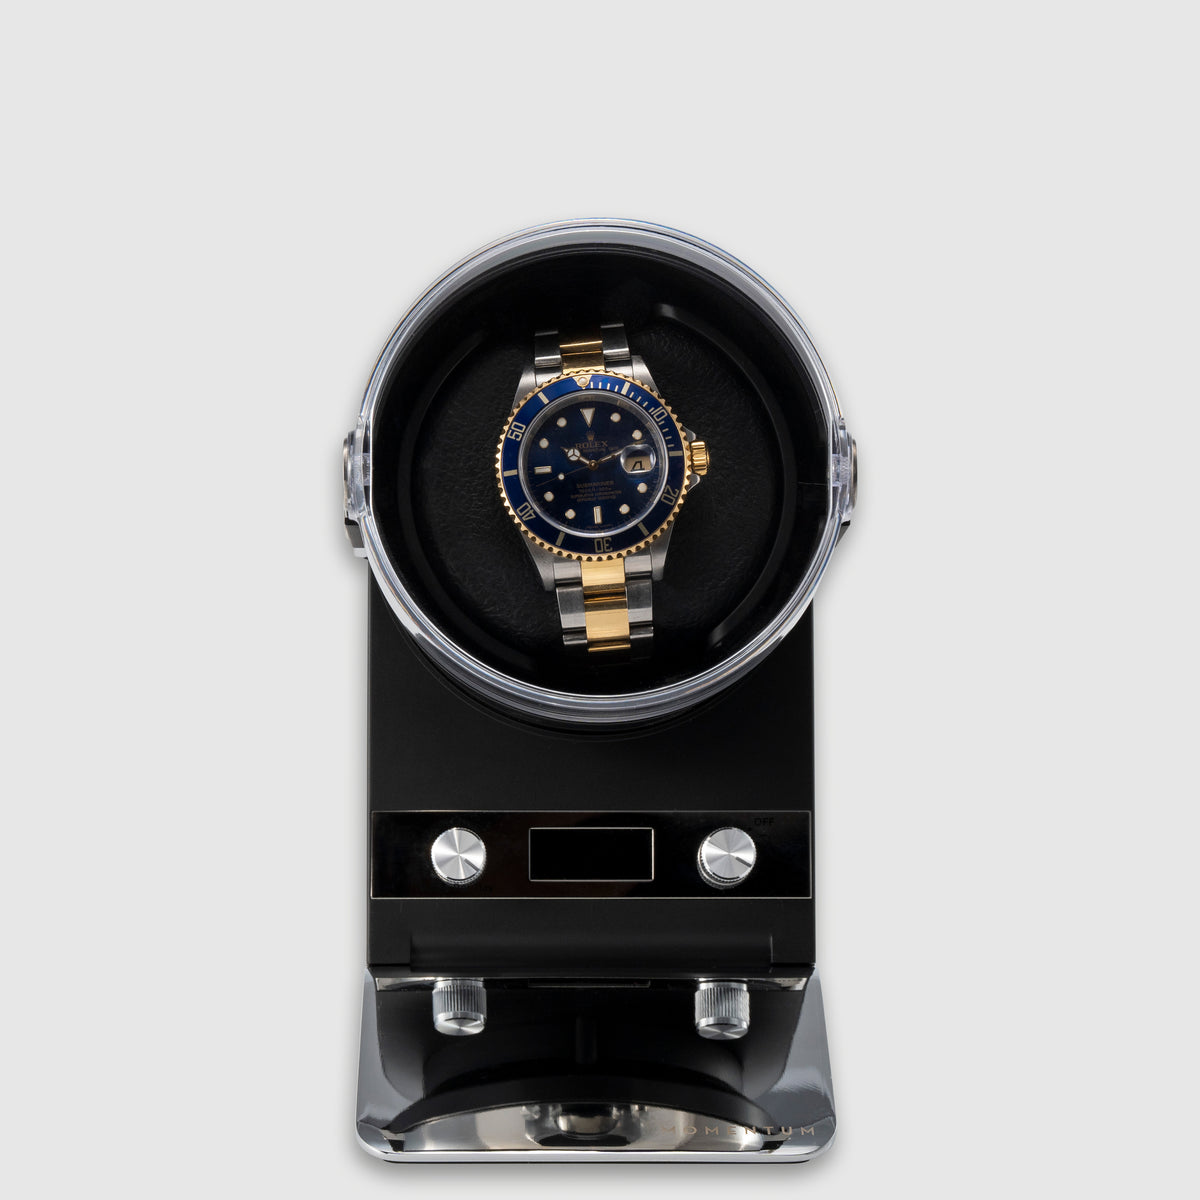 Azure - Battery Powered Watch Winder